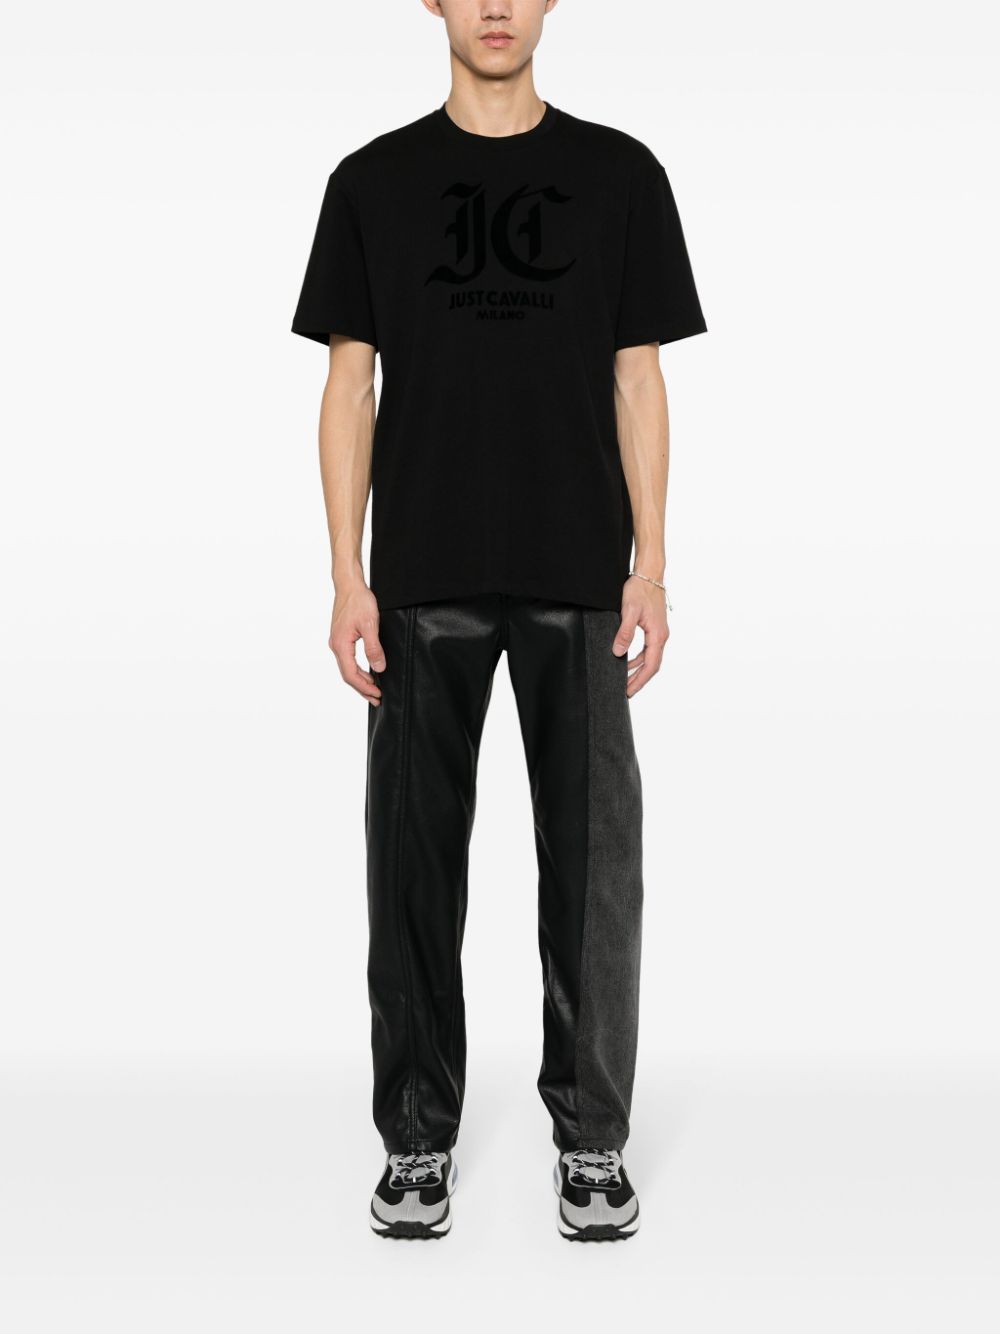 Just Cavalli T-shirt met logo - Zwart